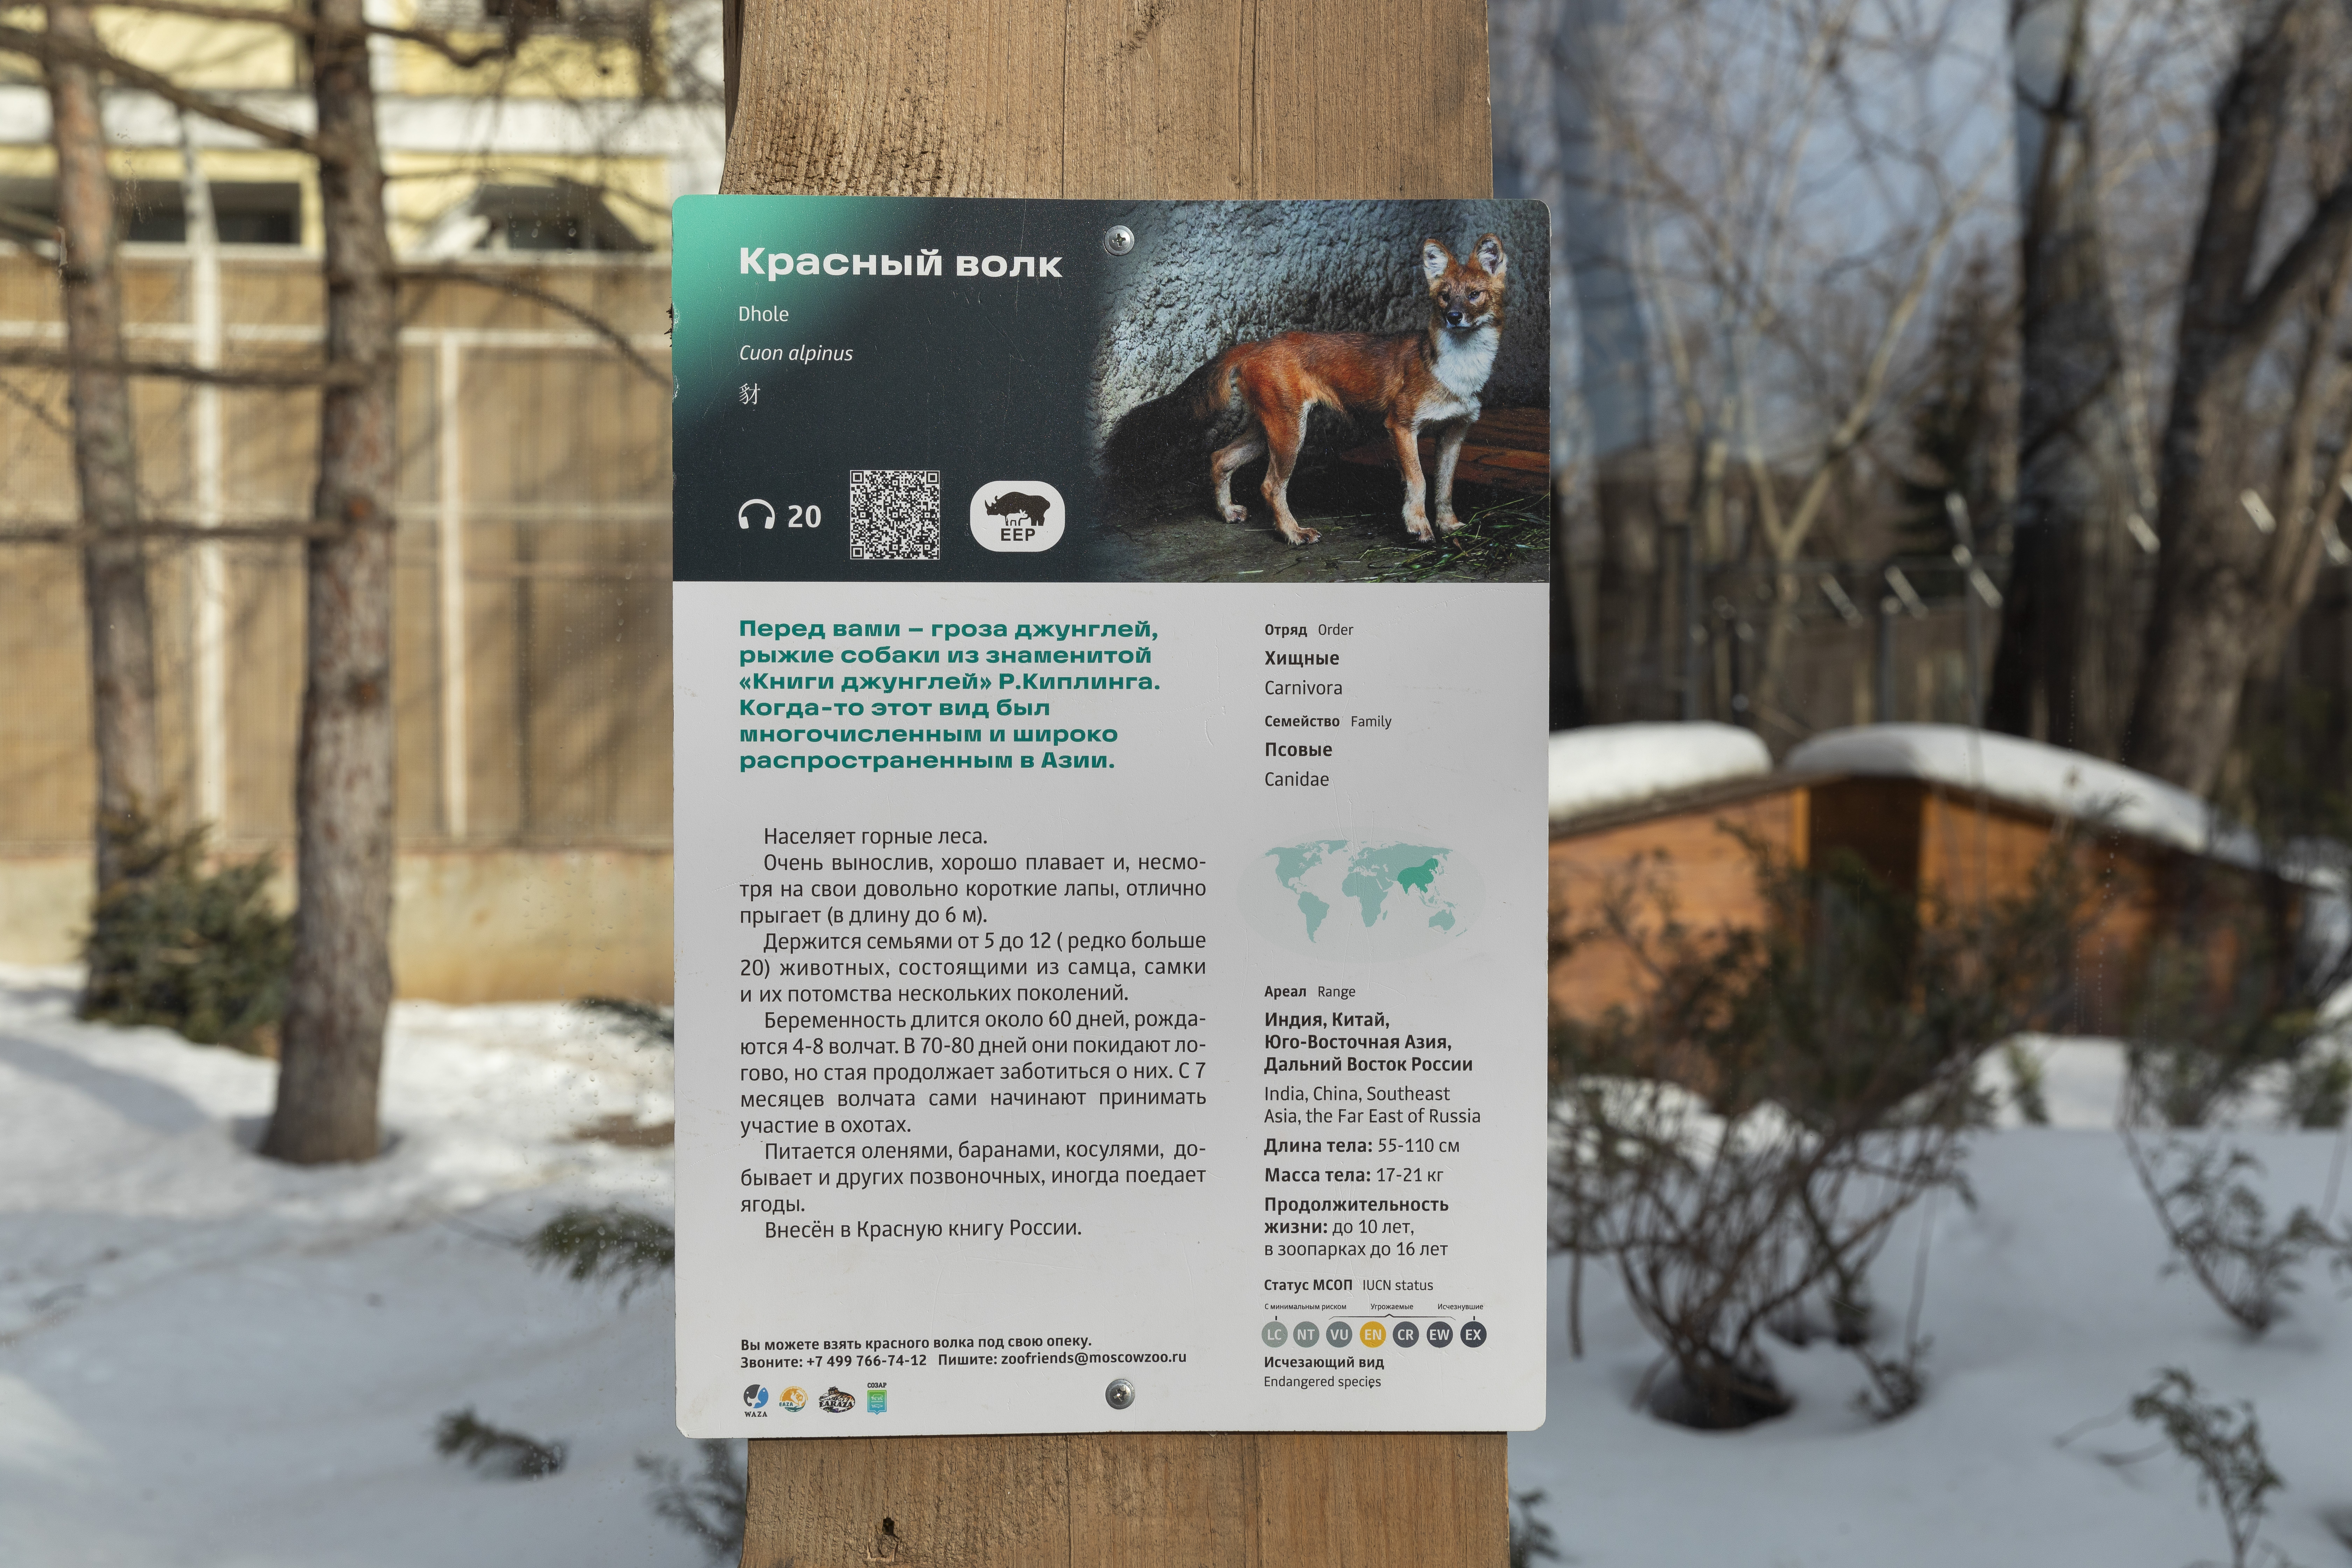 ОЭЗ «Технополис Москва» взяла опекунство над редким волком из столичного зоопарка